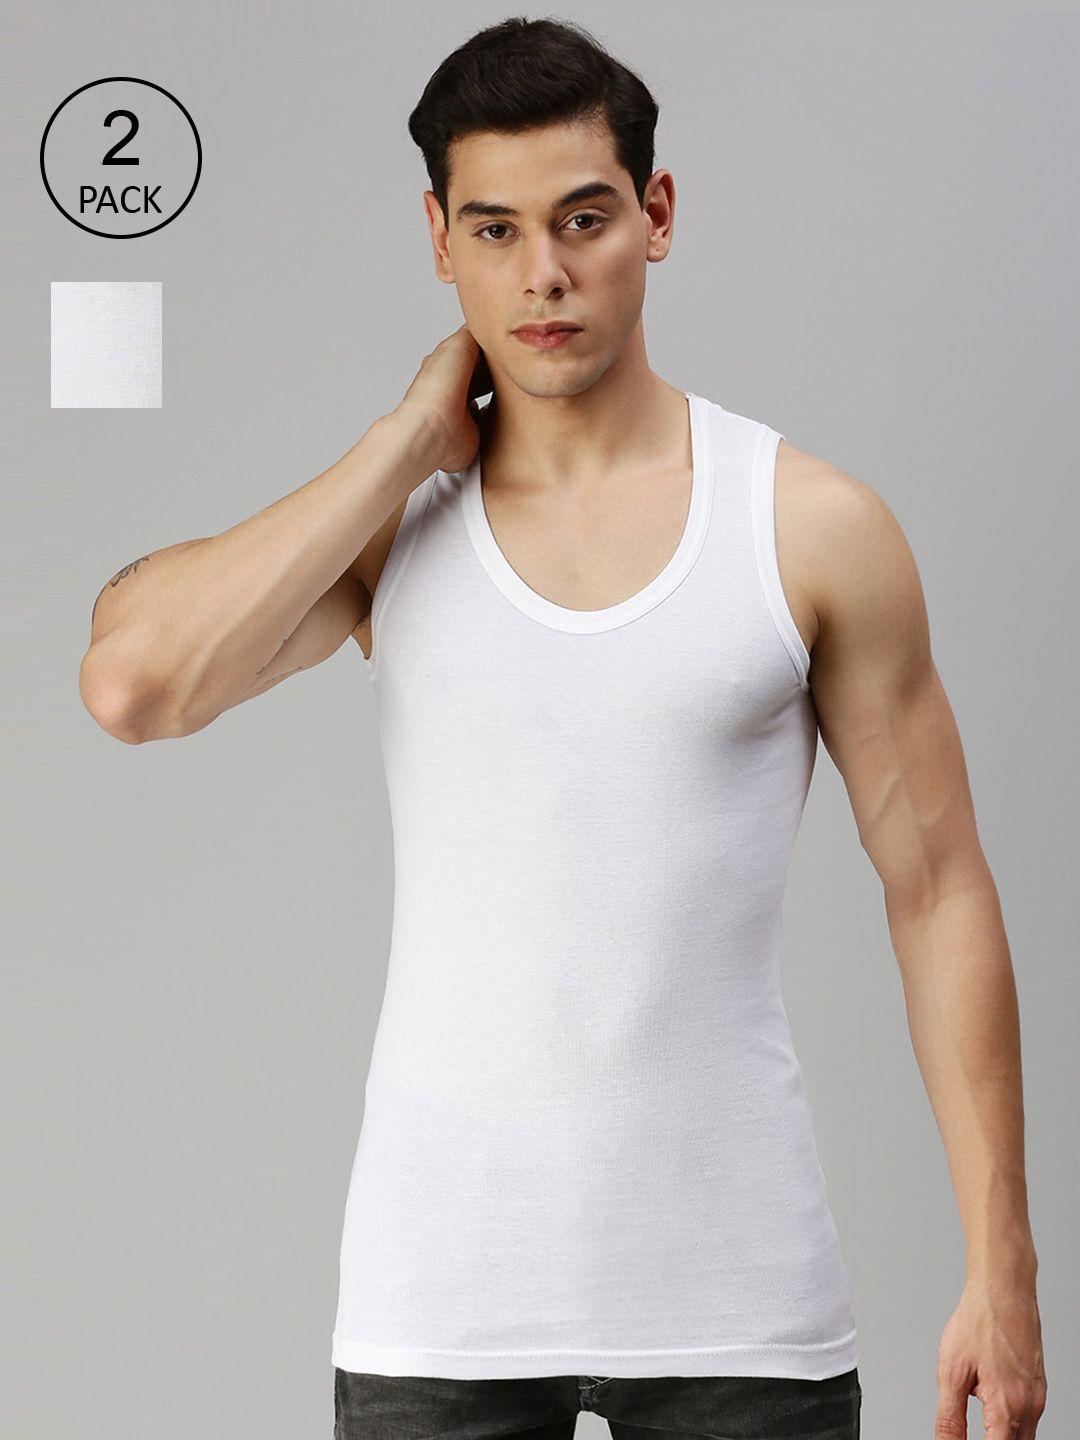 onn-pack-of-2-white-cotton-innerwear-vests